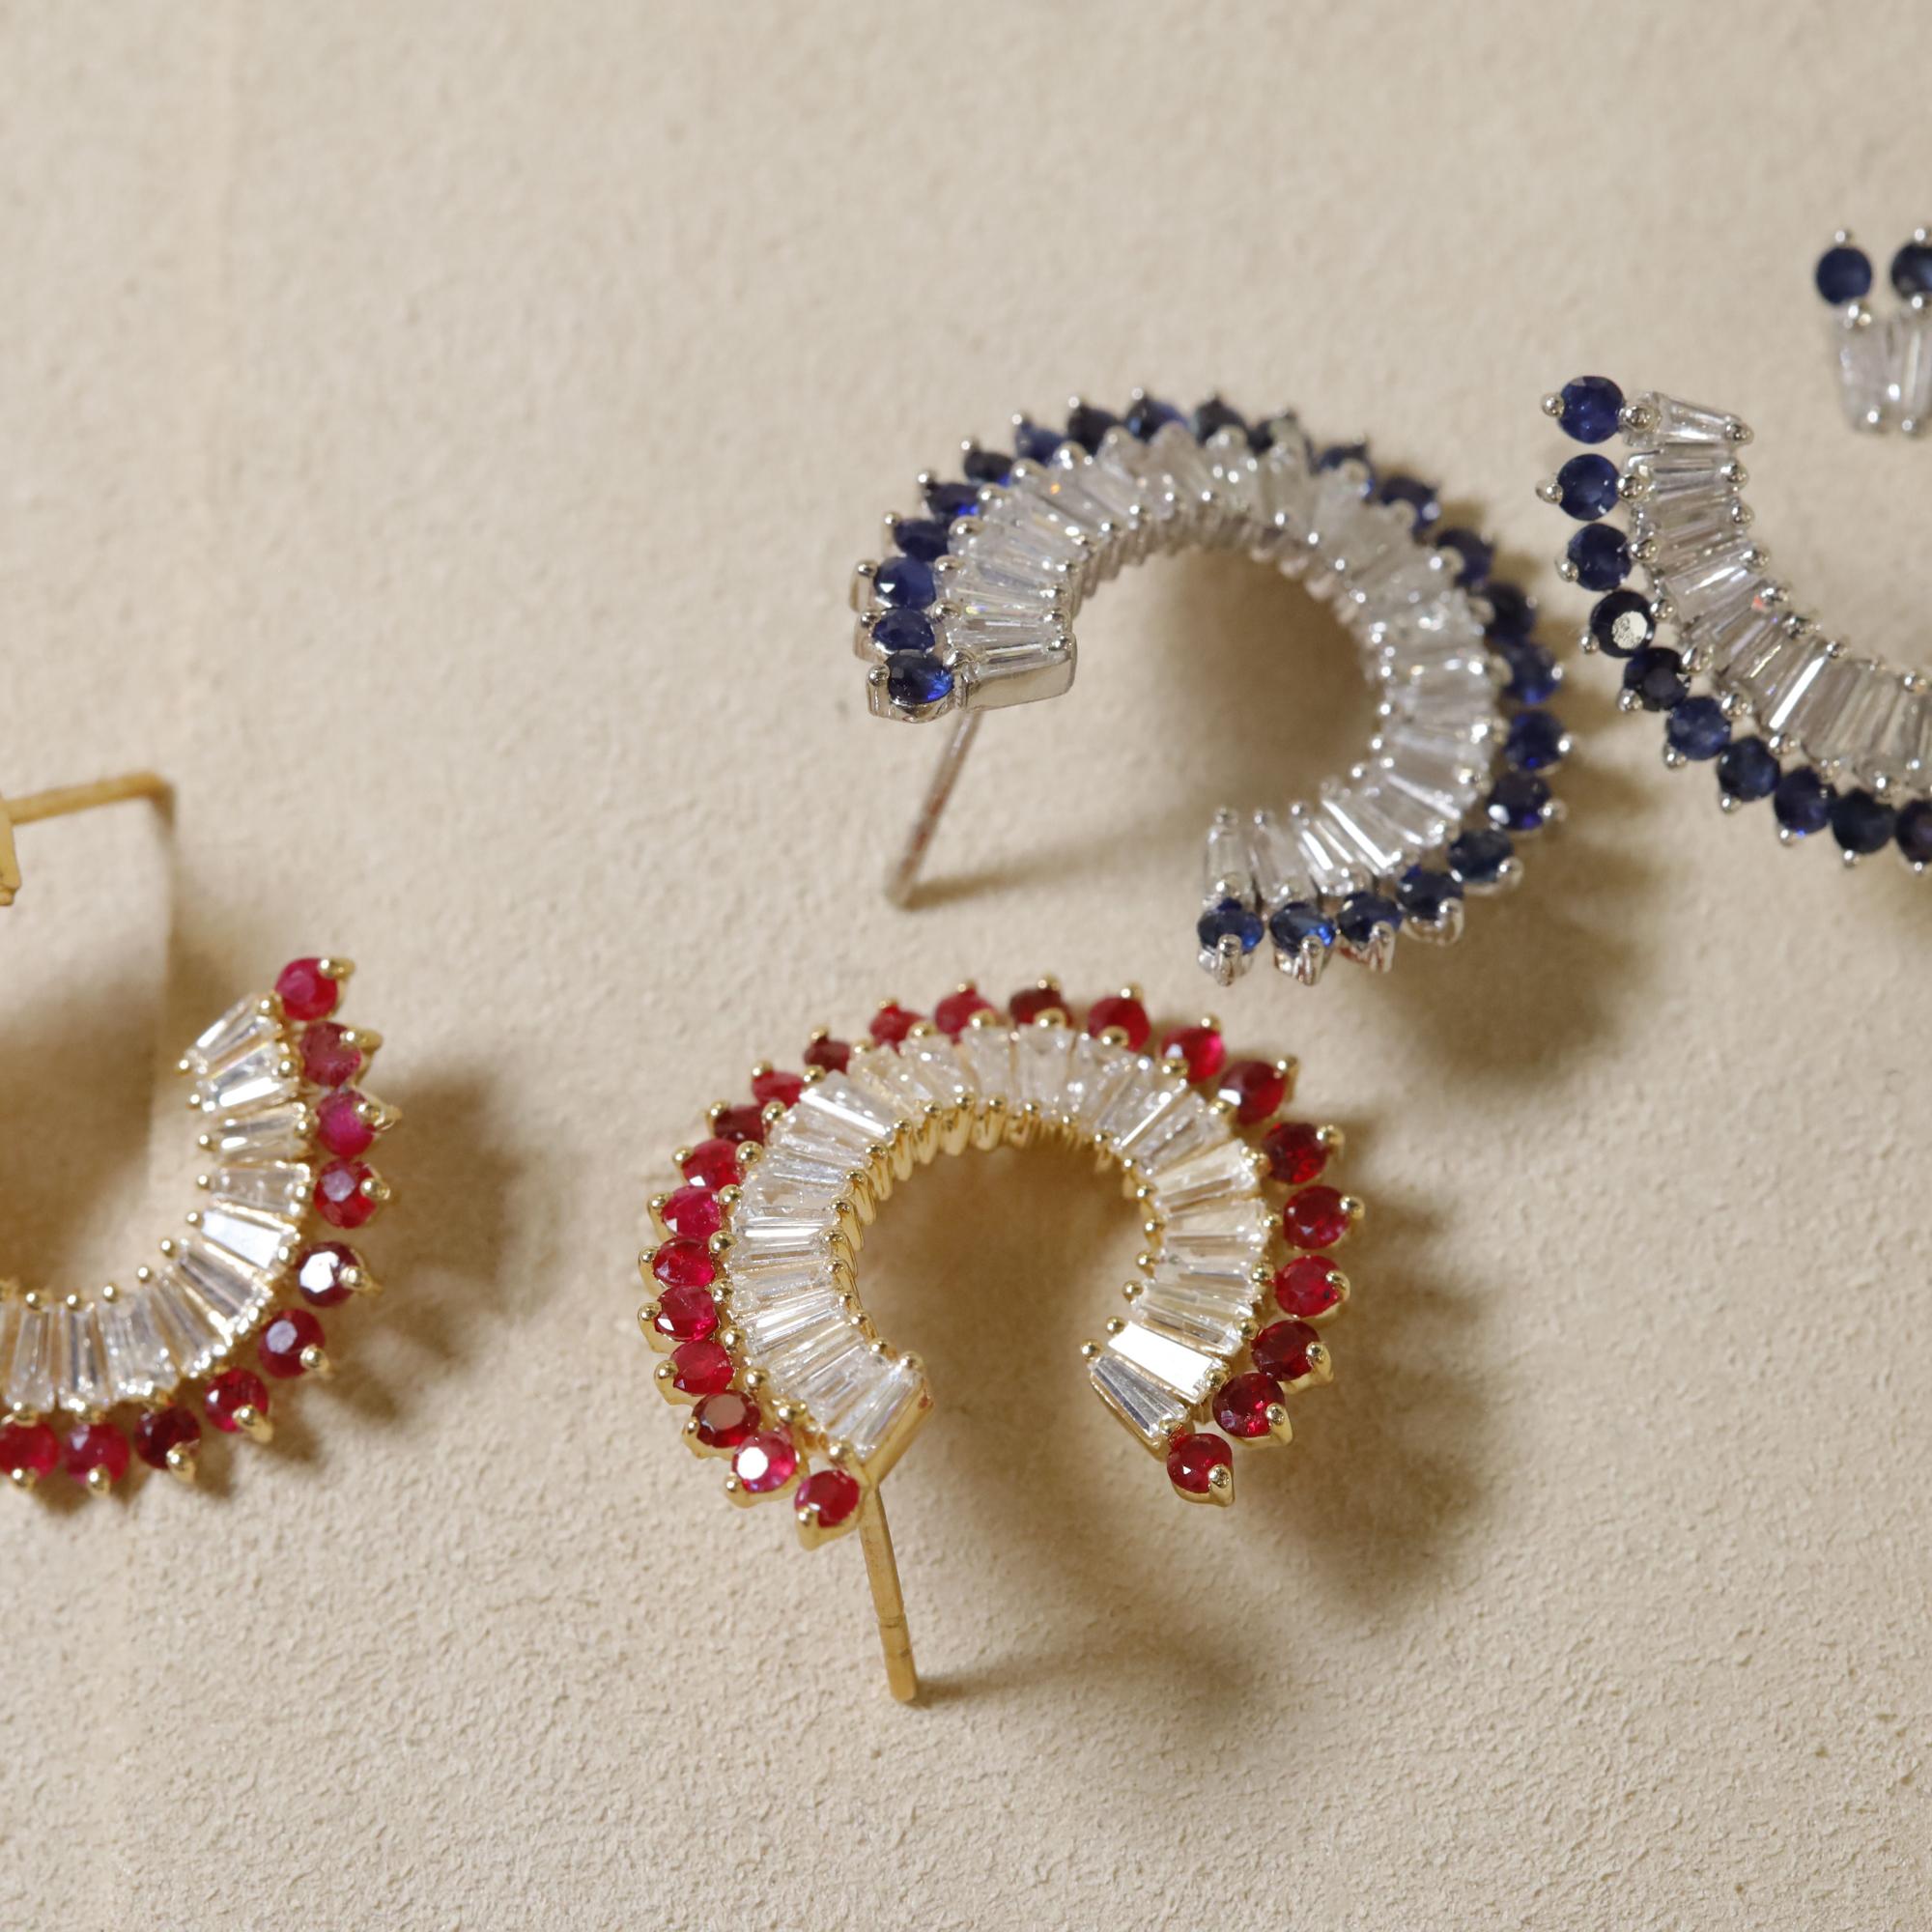 Rachel Koen Blue Sapphire & Diamond Hoop Earrings 14K White Gold In New Condition For Sale In New York, NY